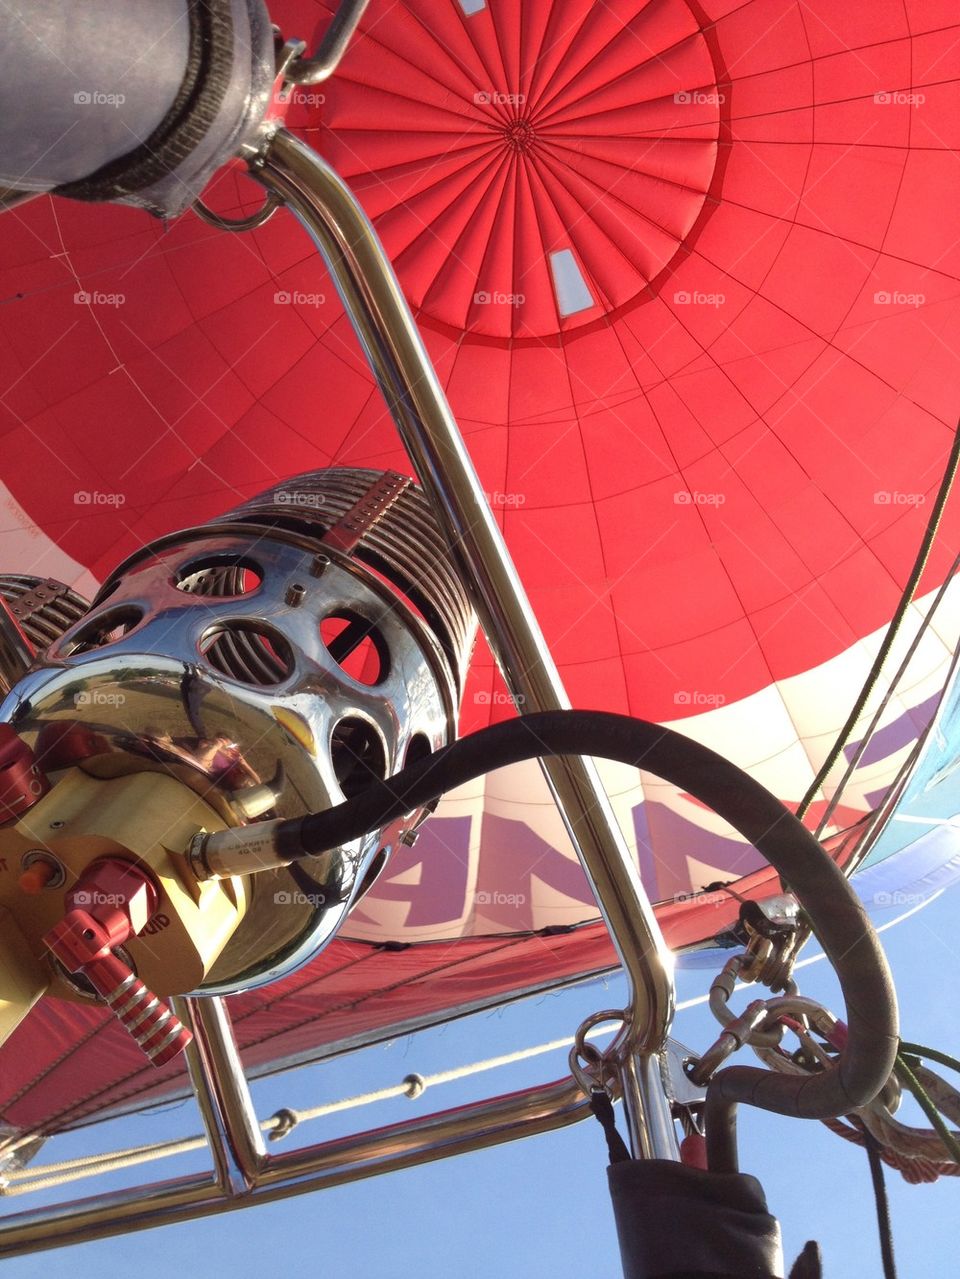 Up in a hot air ballon